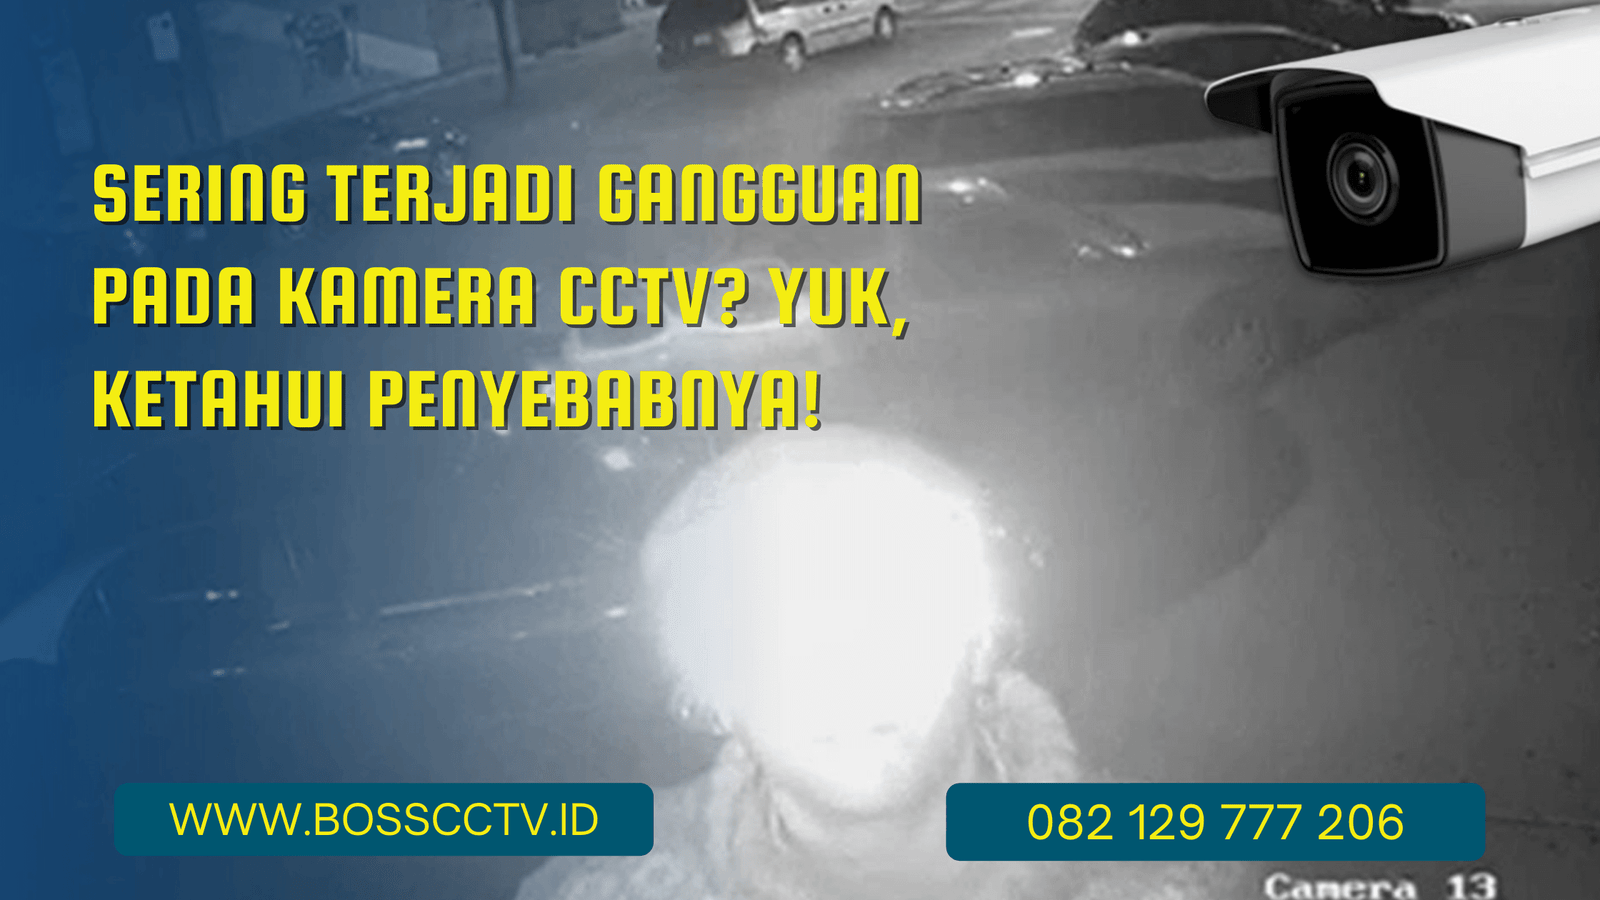 Sering Terjadi Gangguan Pada Kamera CCTV Yuk, Ketahui Penyebabnya!